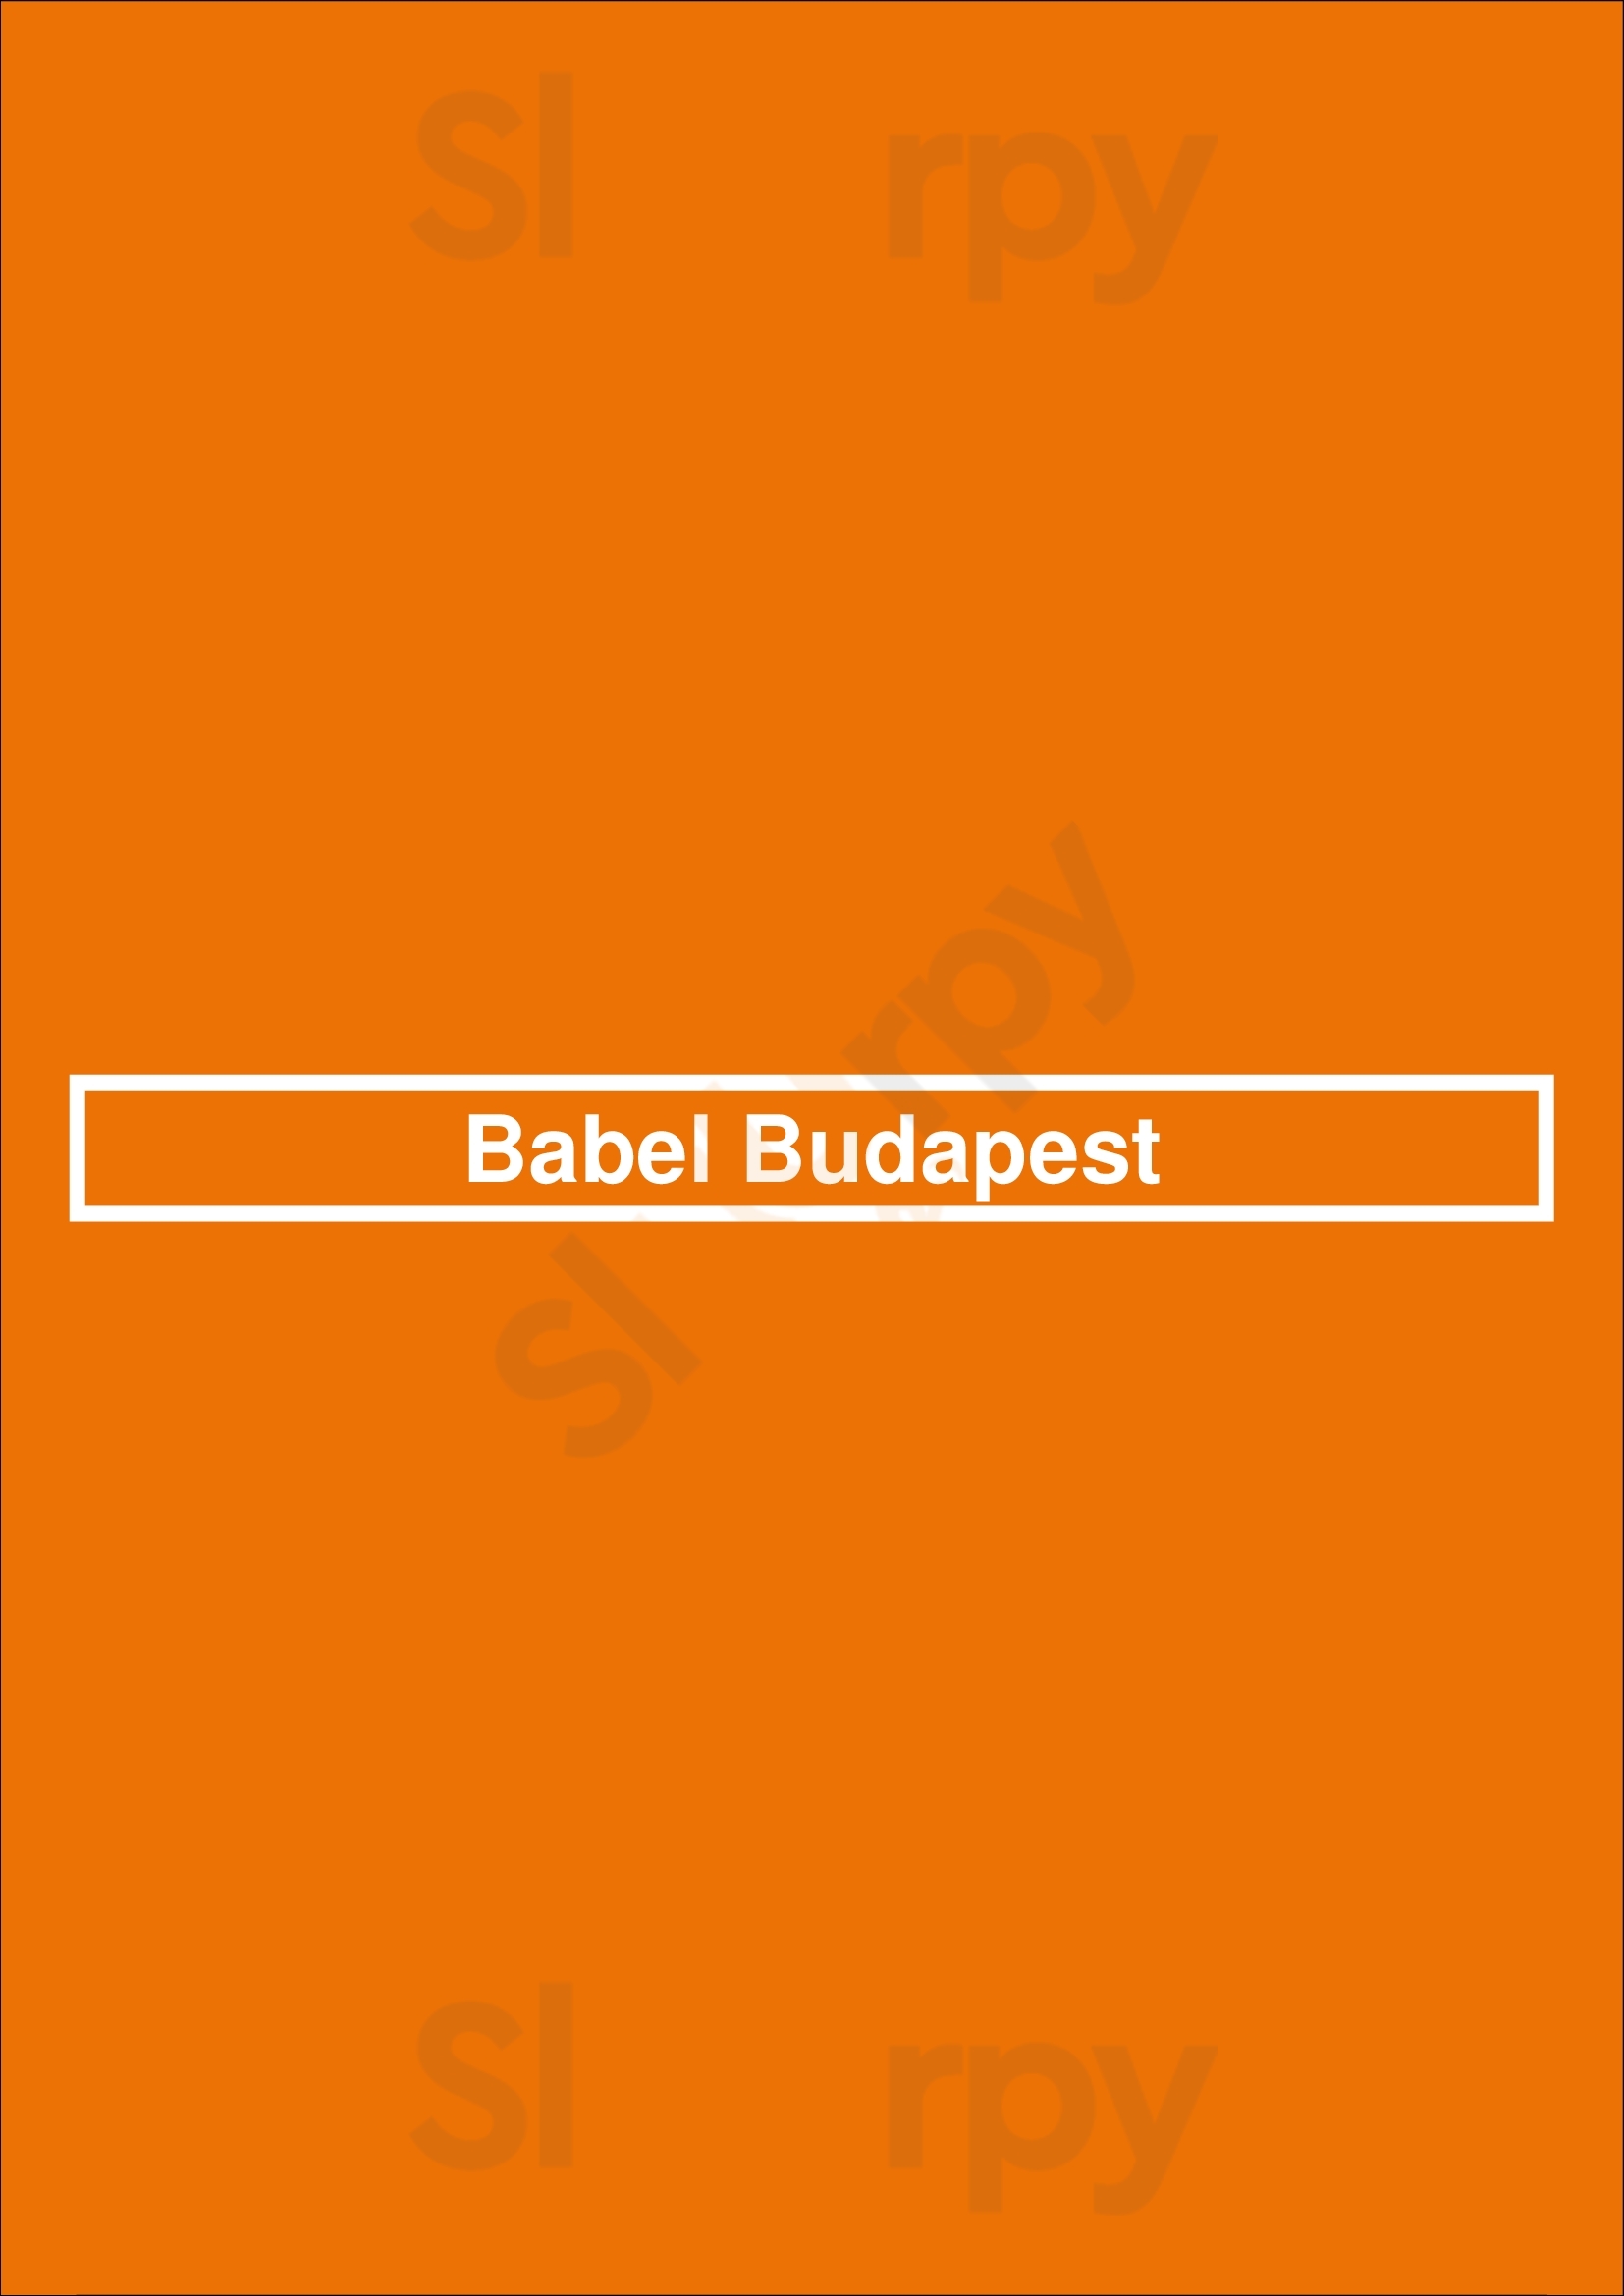 Babel Budapest Budapest Menu - 1